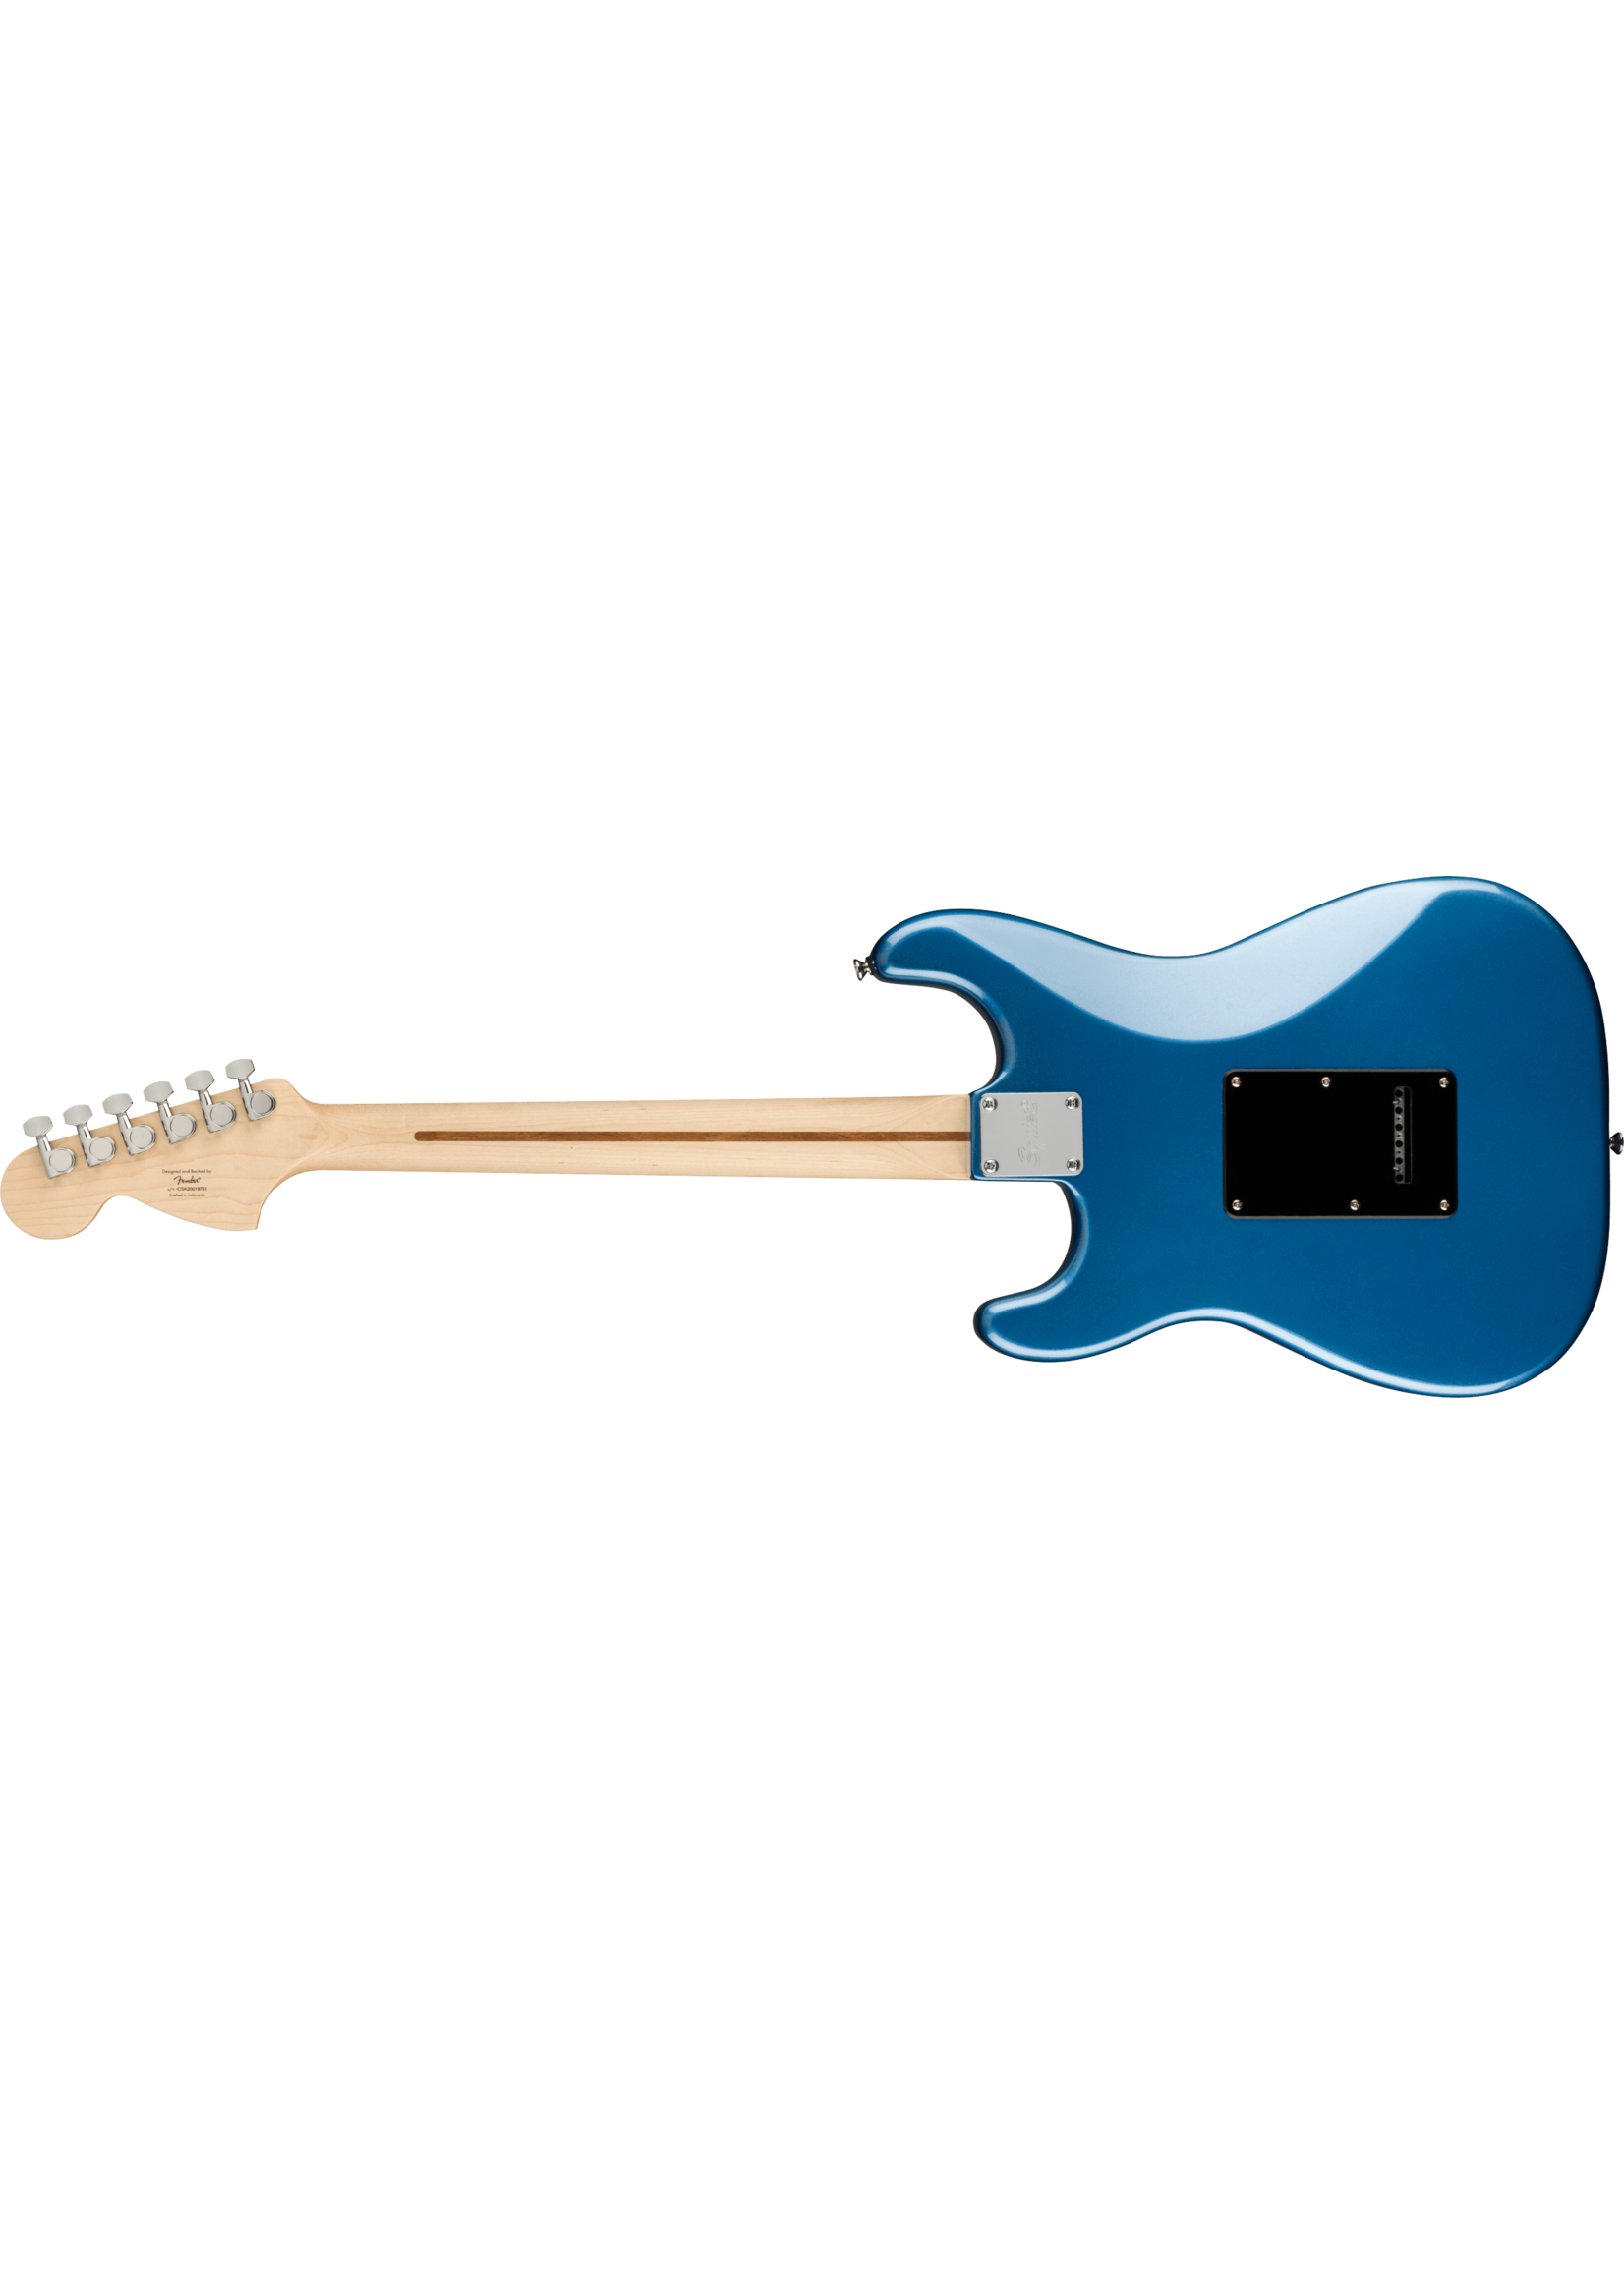 Squier Squier Affinity Stratocaster Maple Neck Lake Placid Blue black pickguard